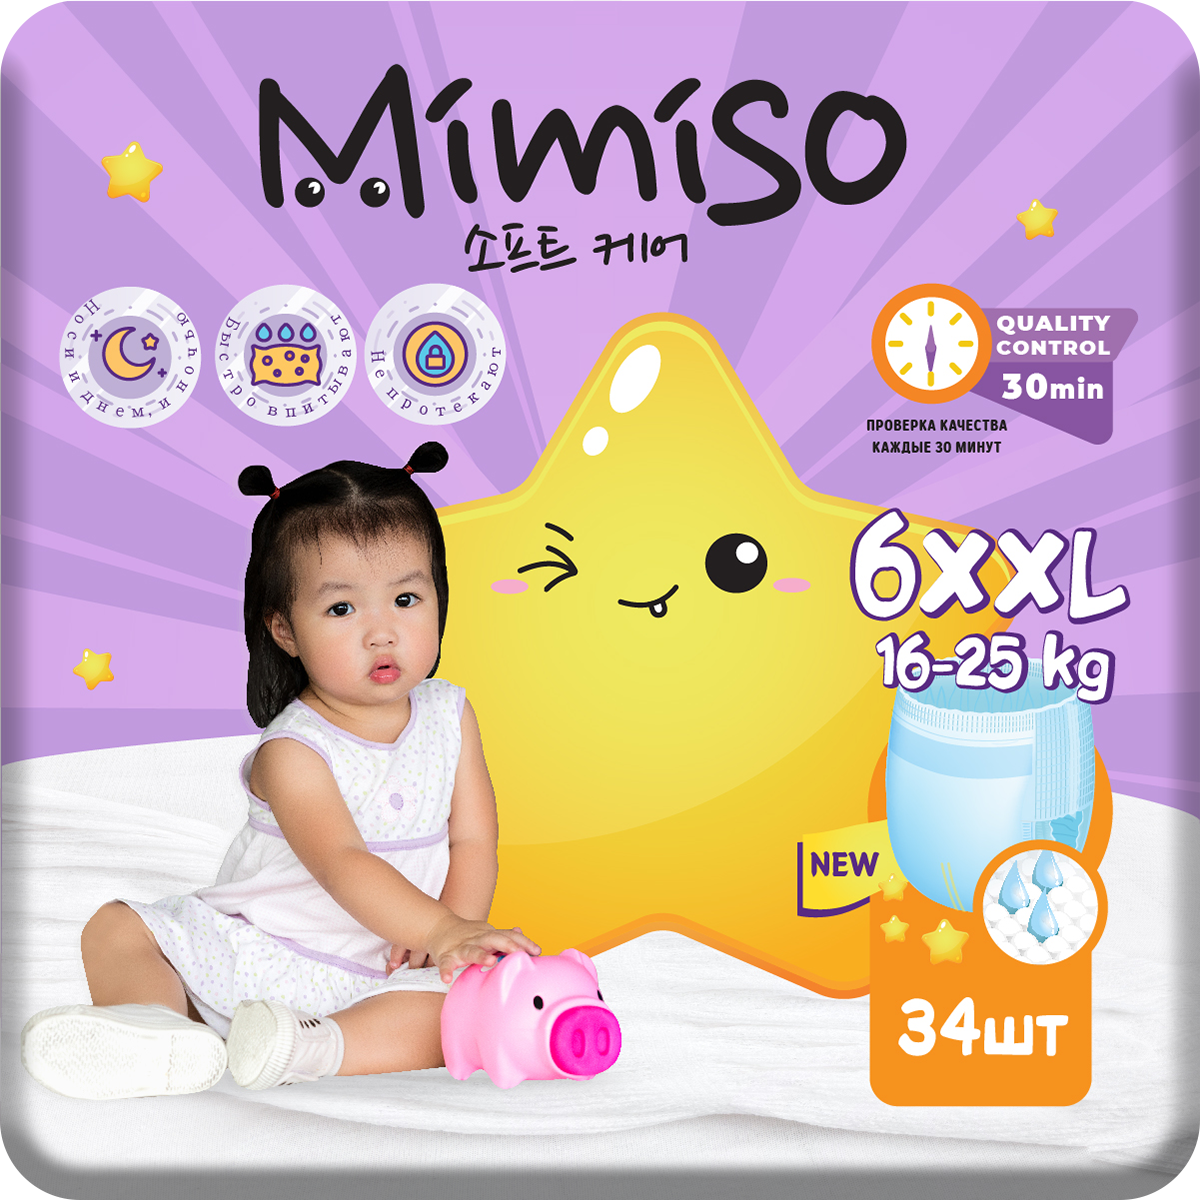 Трусики Mimiso одноразовые для детей 6/XXL 16-25 кг 34шт - фото 1